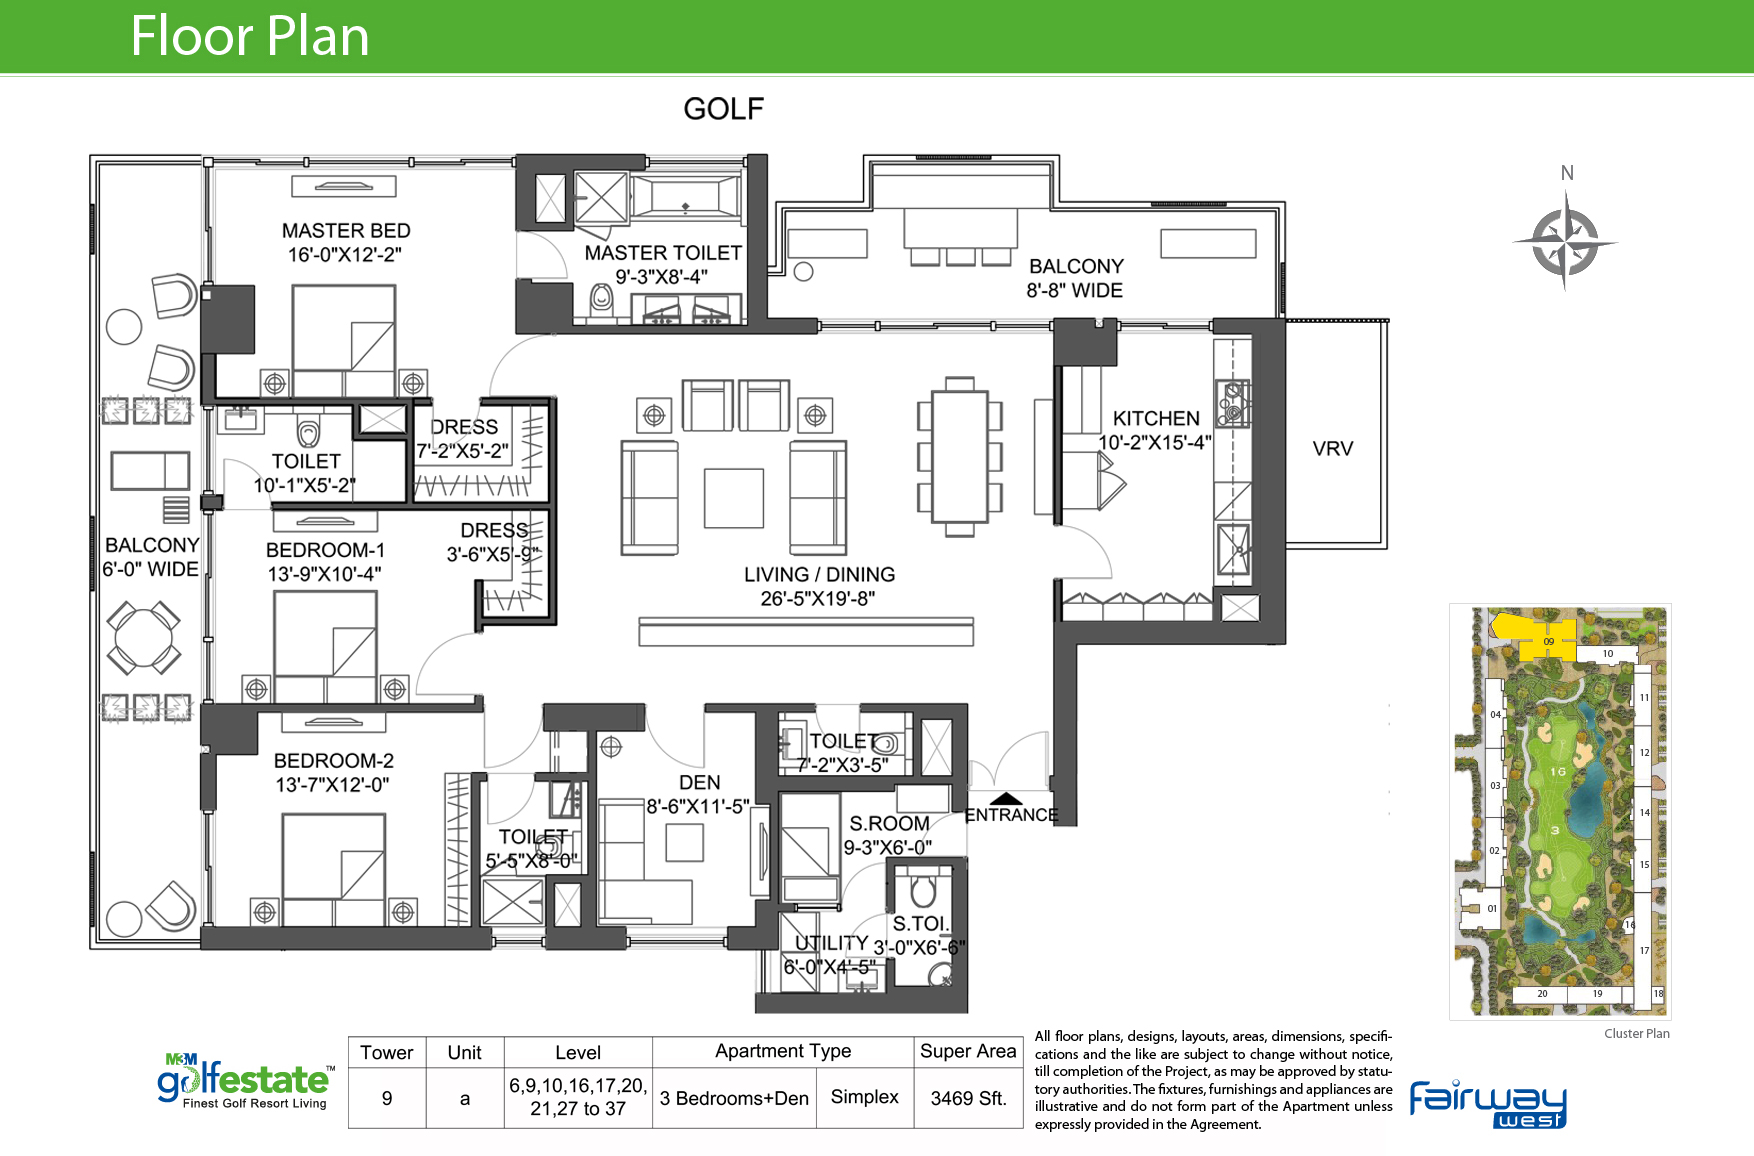 Floor plan of M3M Golf estate Fairway West 3469 Sqft